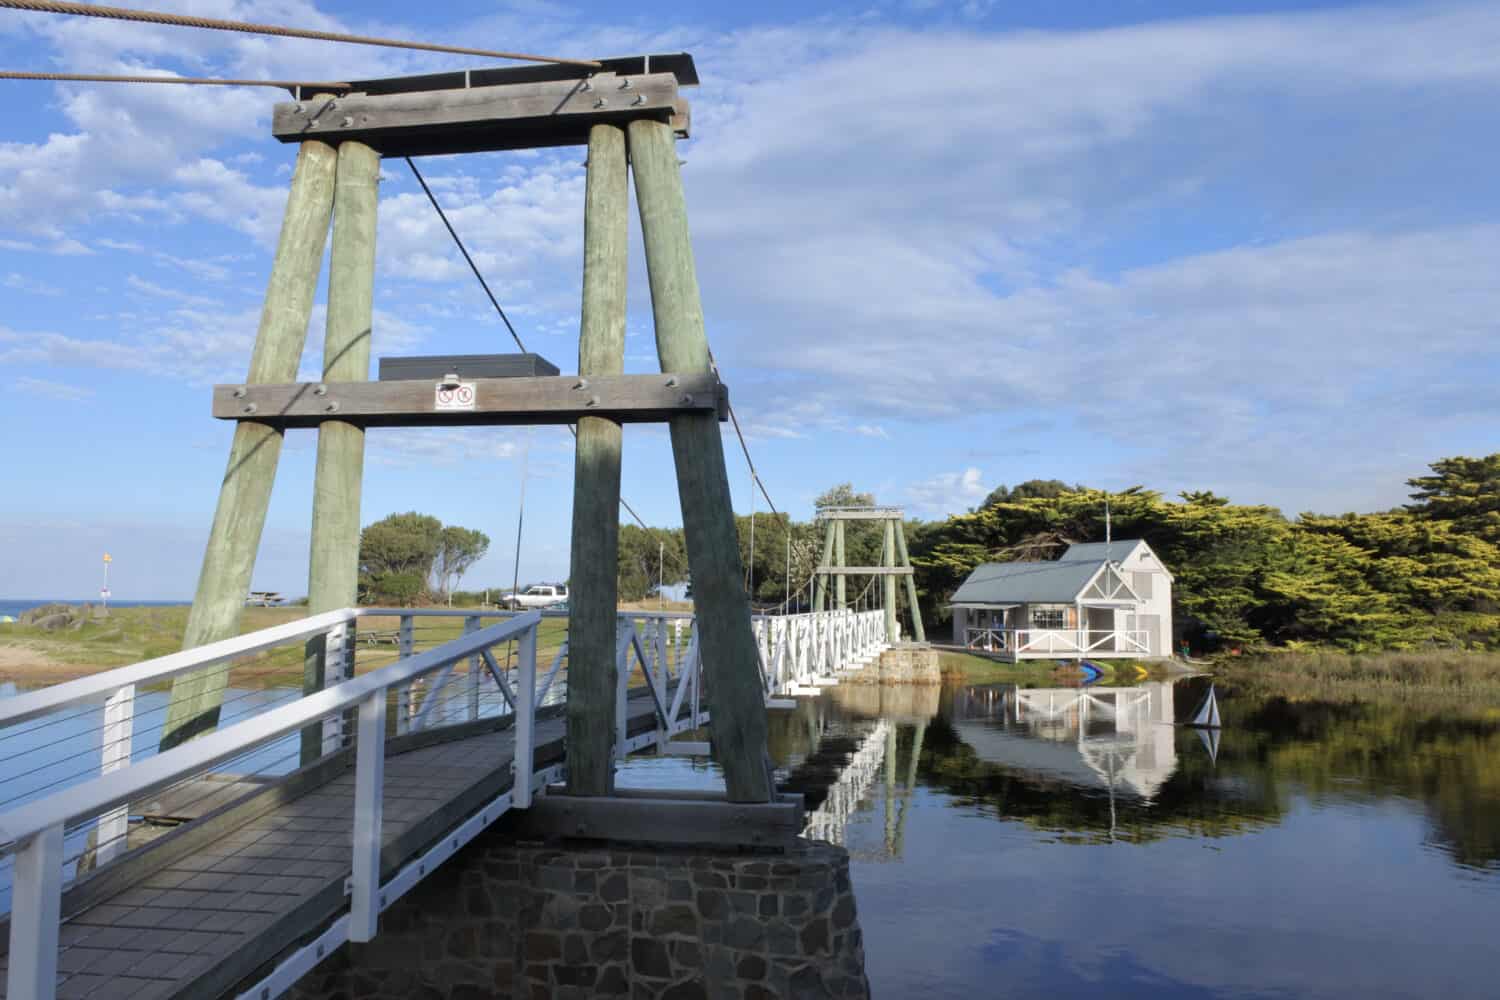 Swing bridge and boathouse in Lorne, Victoria, Australia